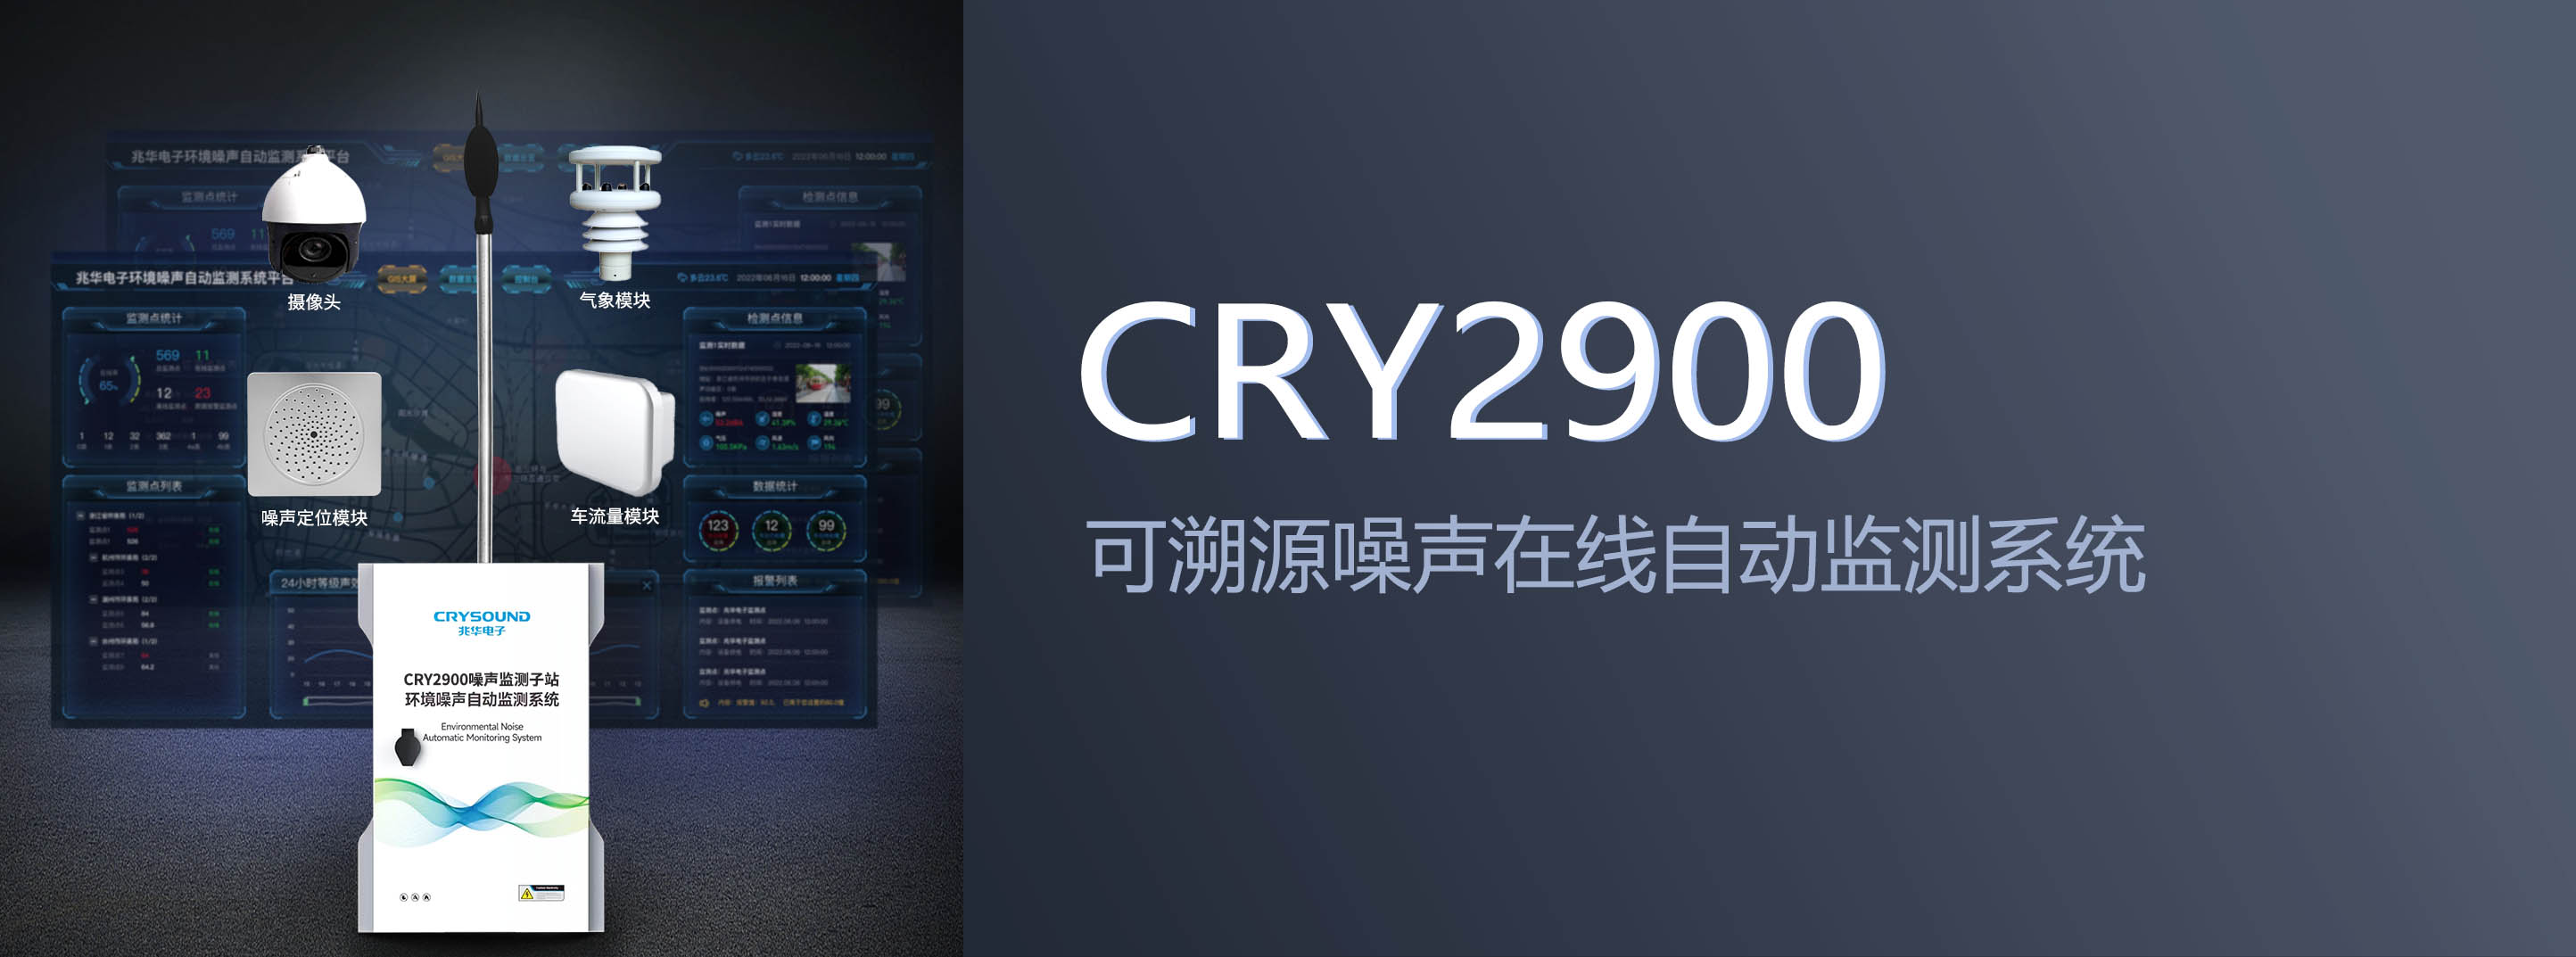 CRY2900可溯源環境噪聲自動監測系統